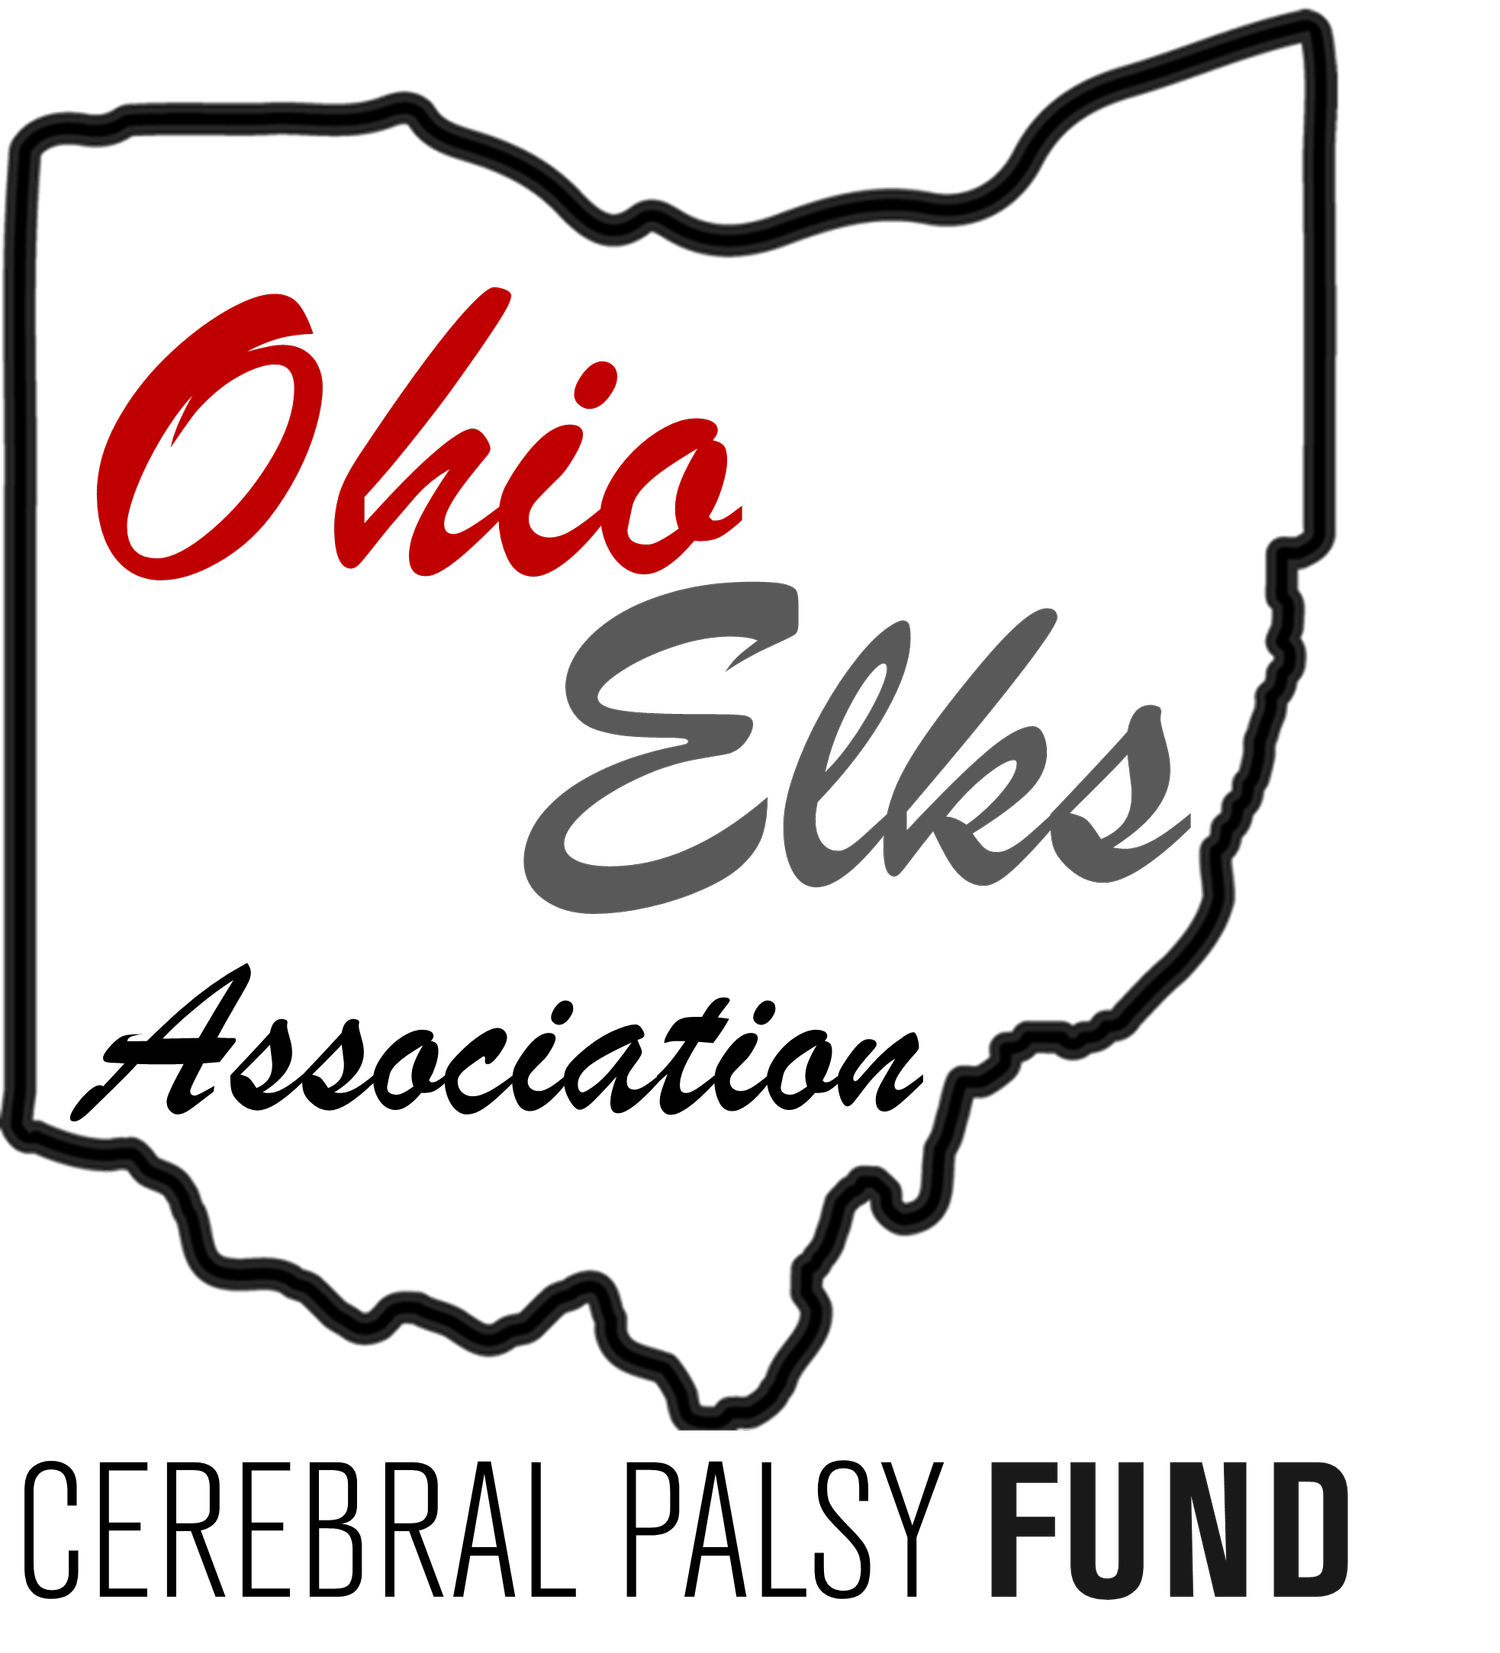 Ohio Elks Cerebral Palsy Fund